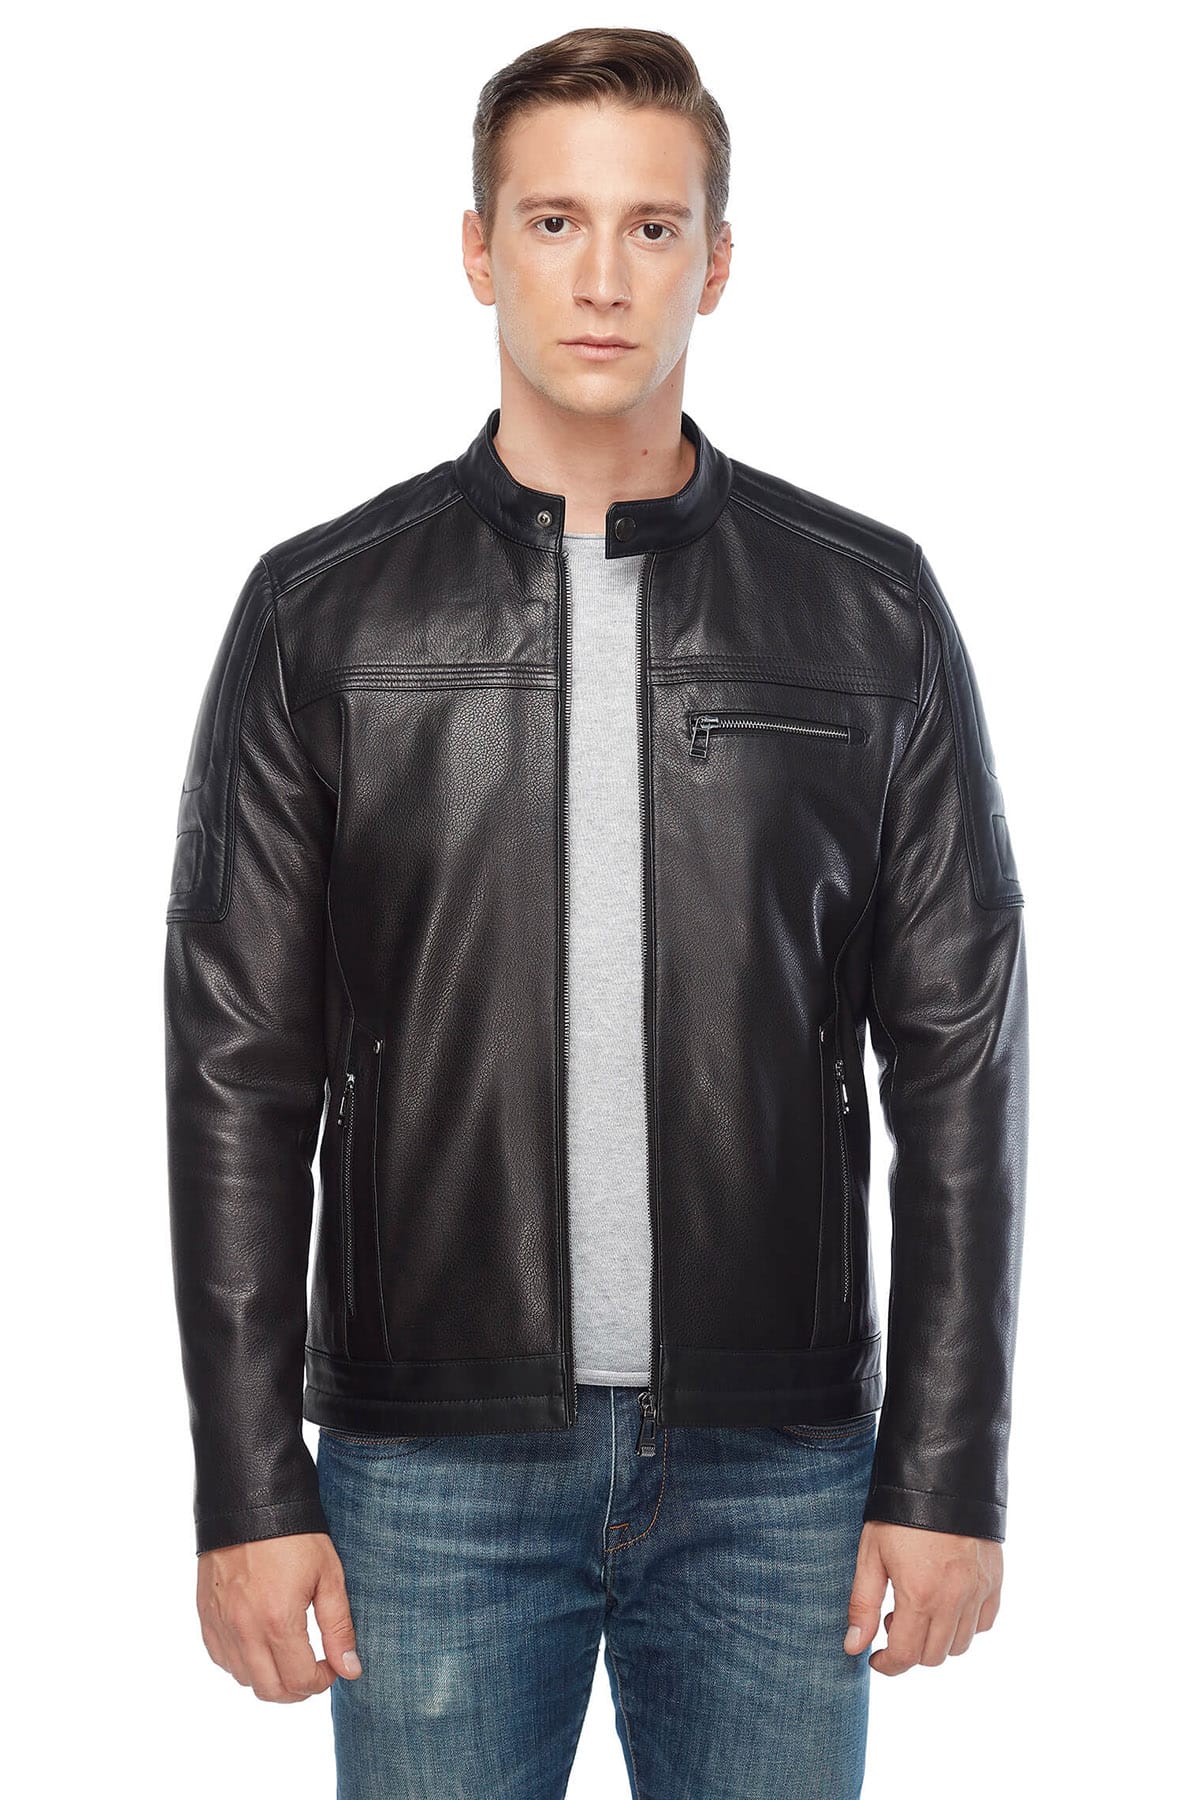 You've Searched for Mens Black Leather Sport Jacket